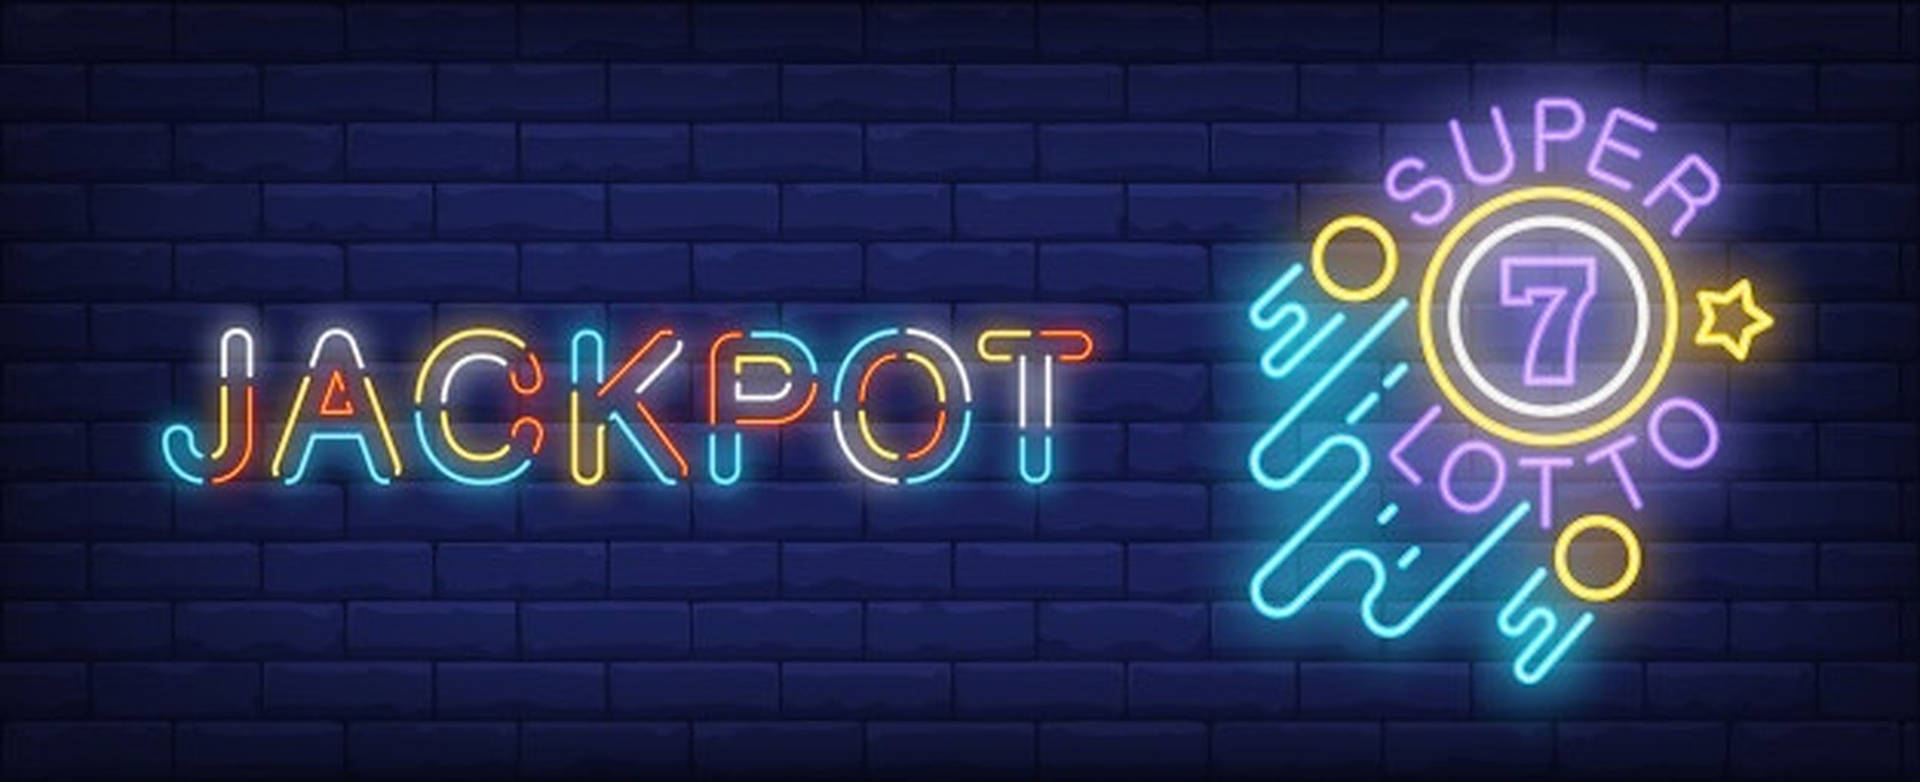 Lottery Jackpot Neon Signage